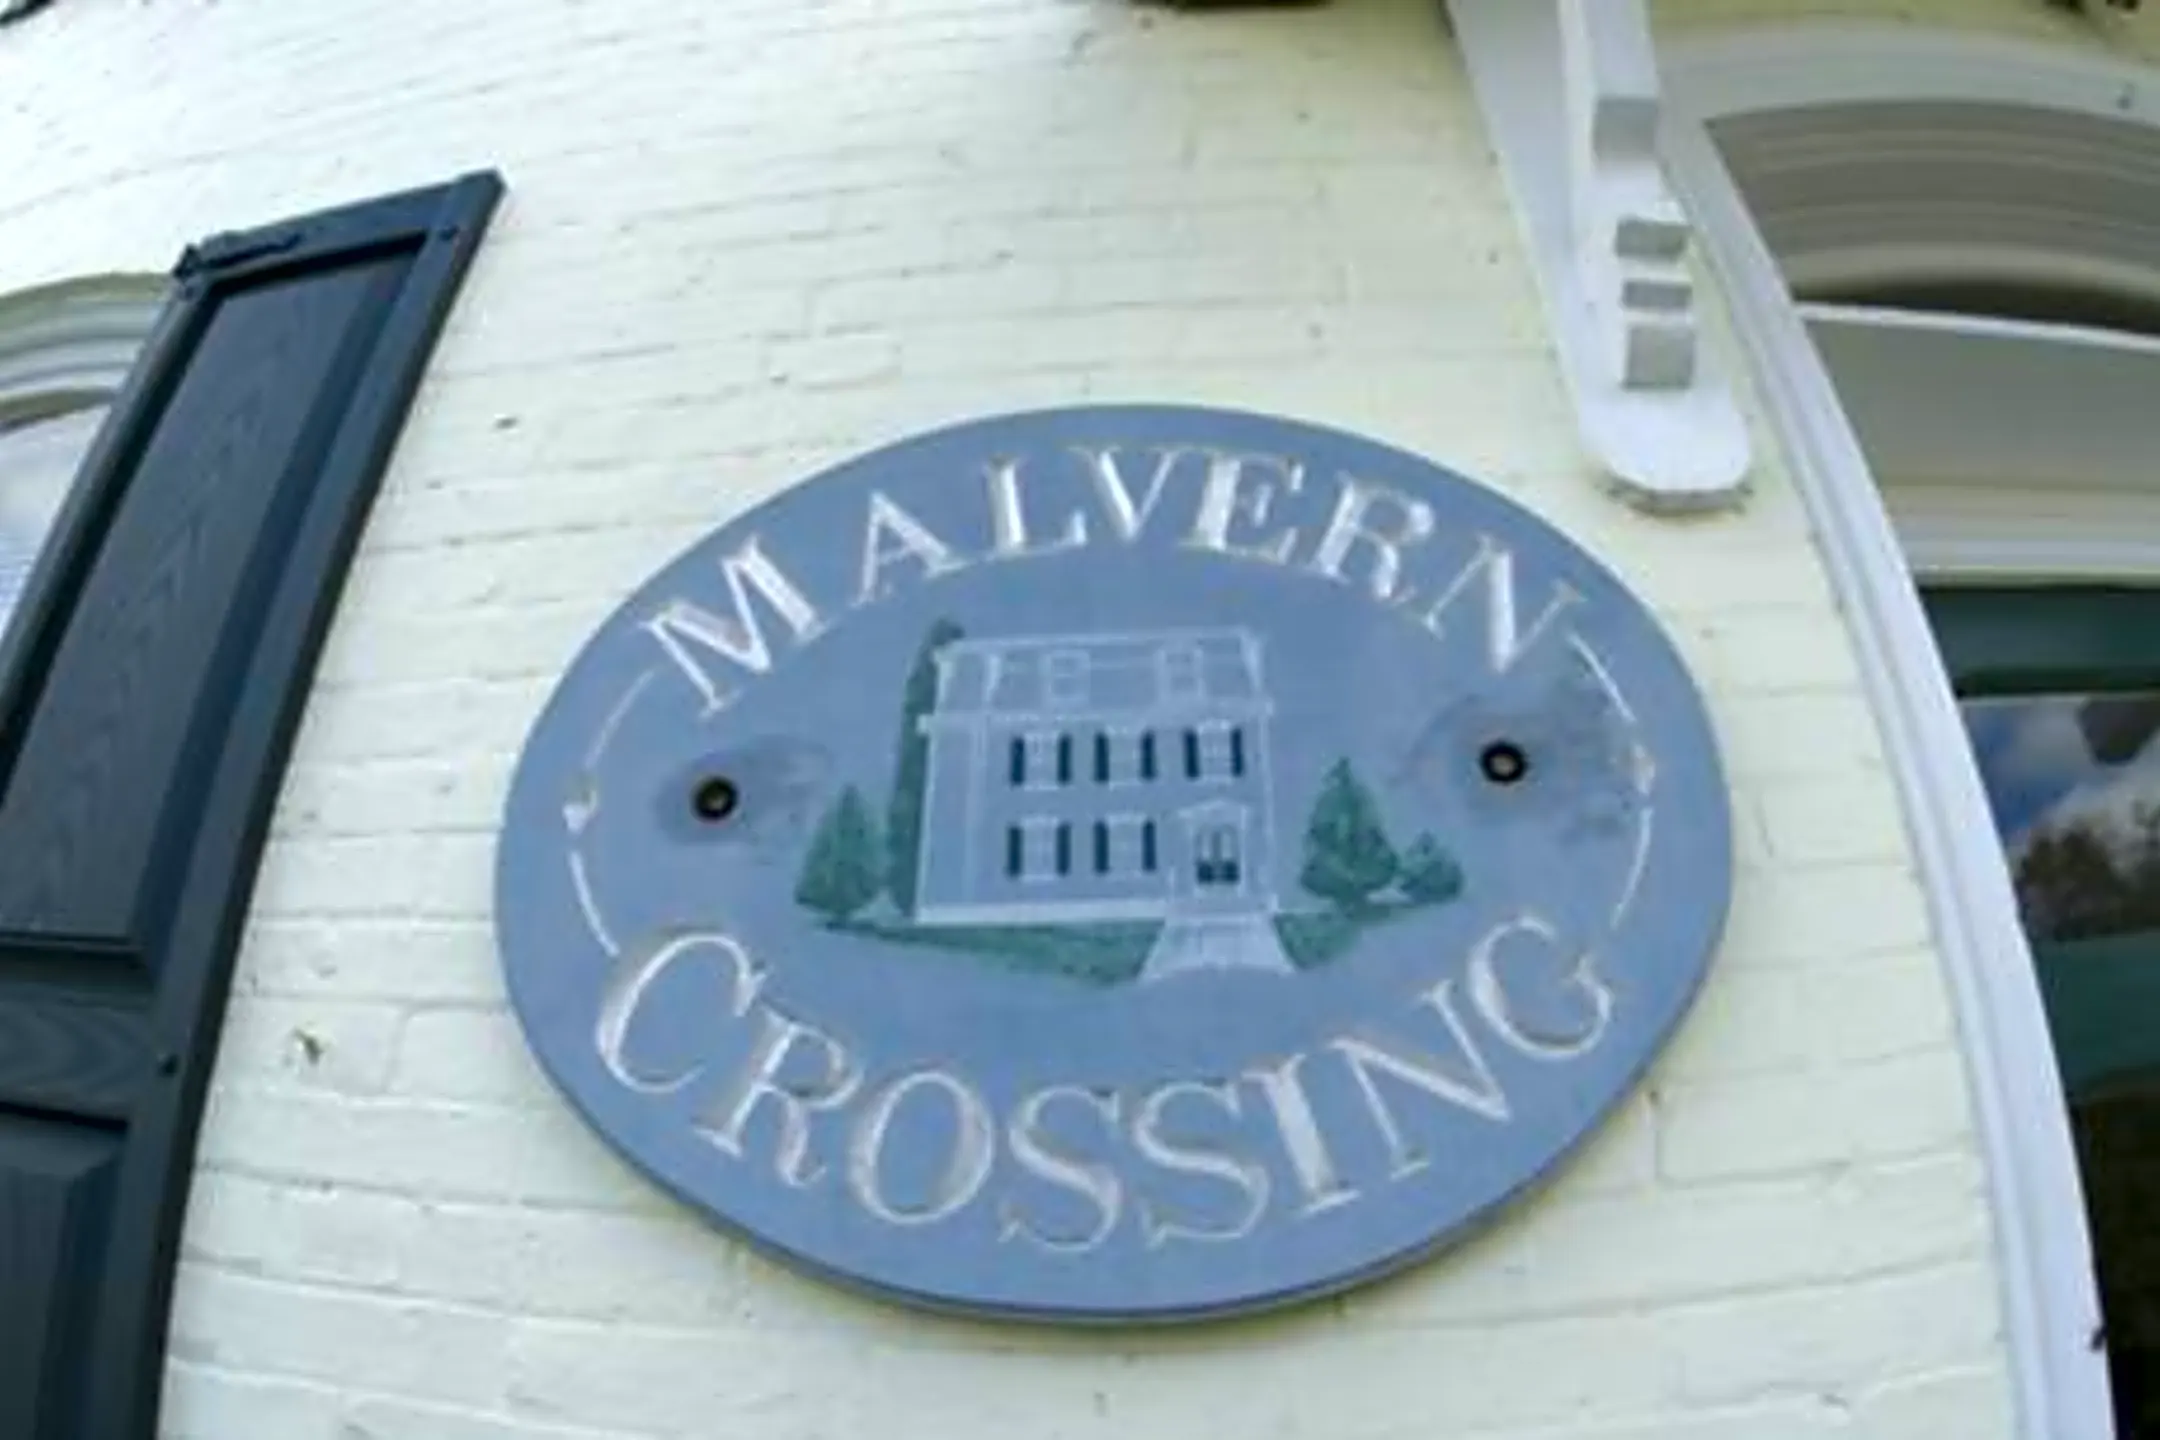 Community Signage - Malvern Crossing - Malvern, PA